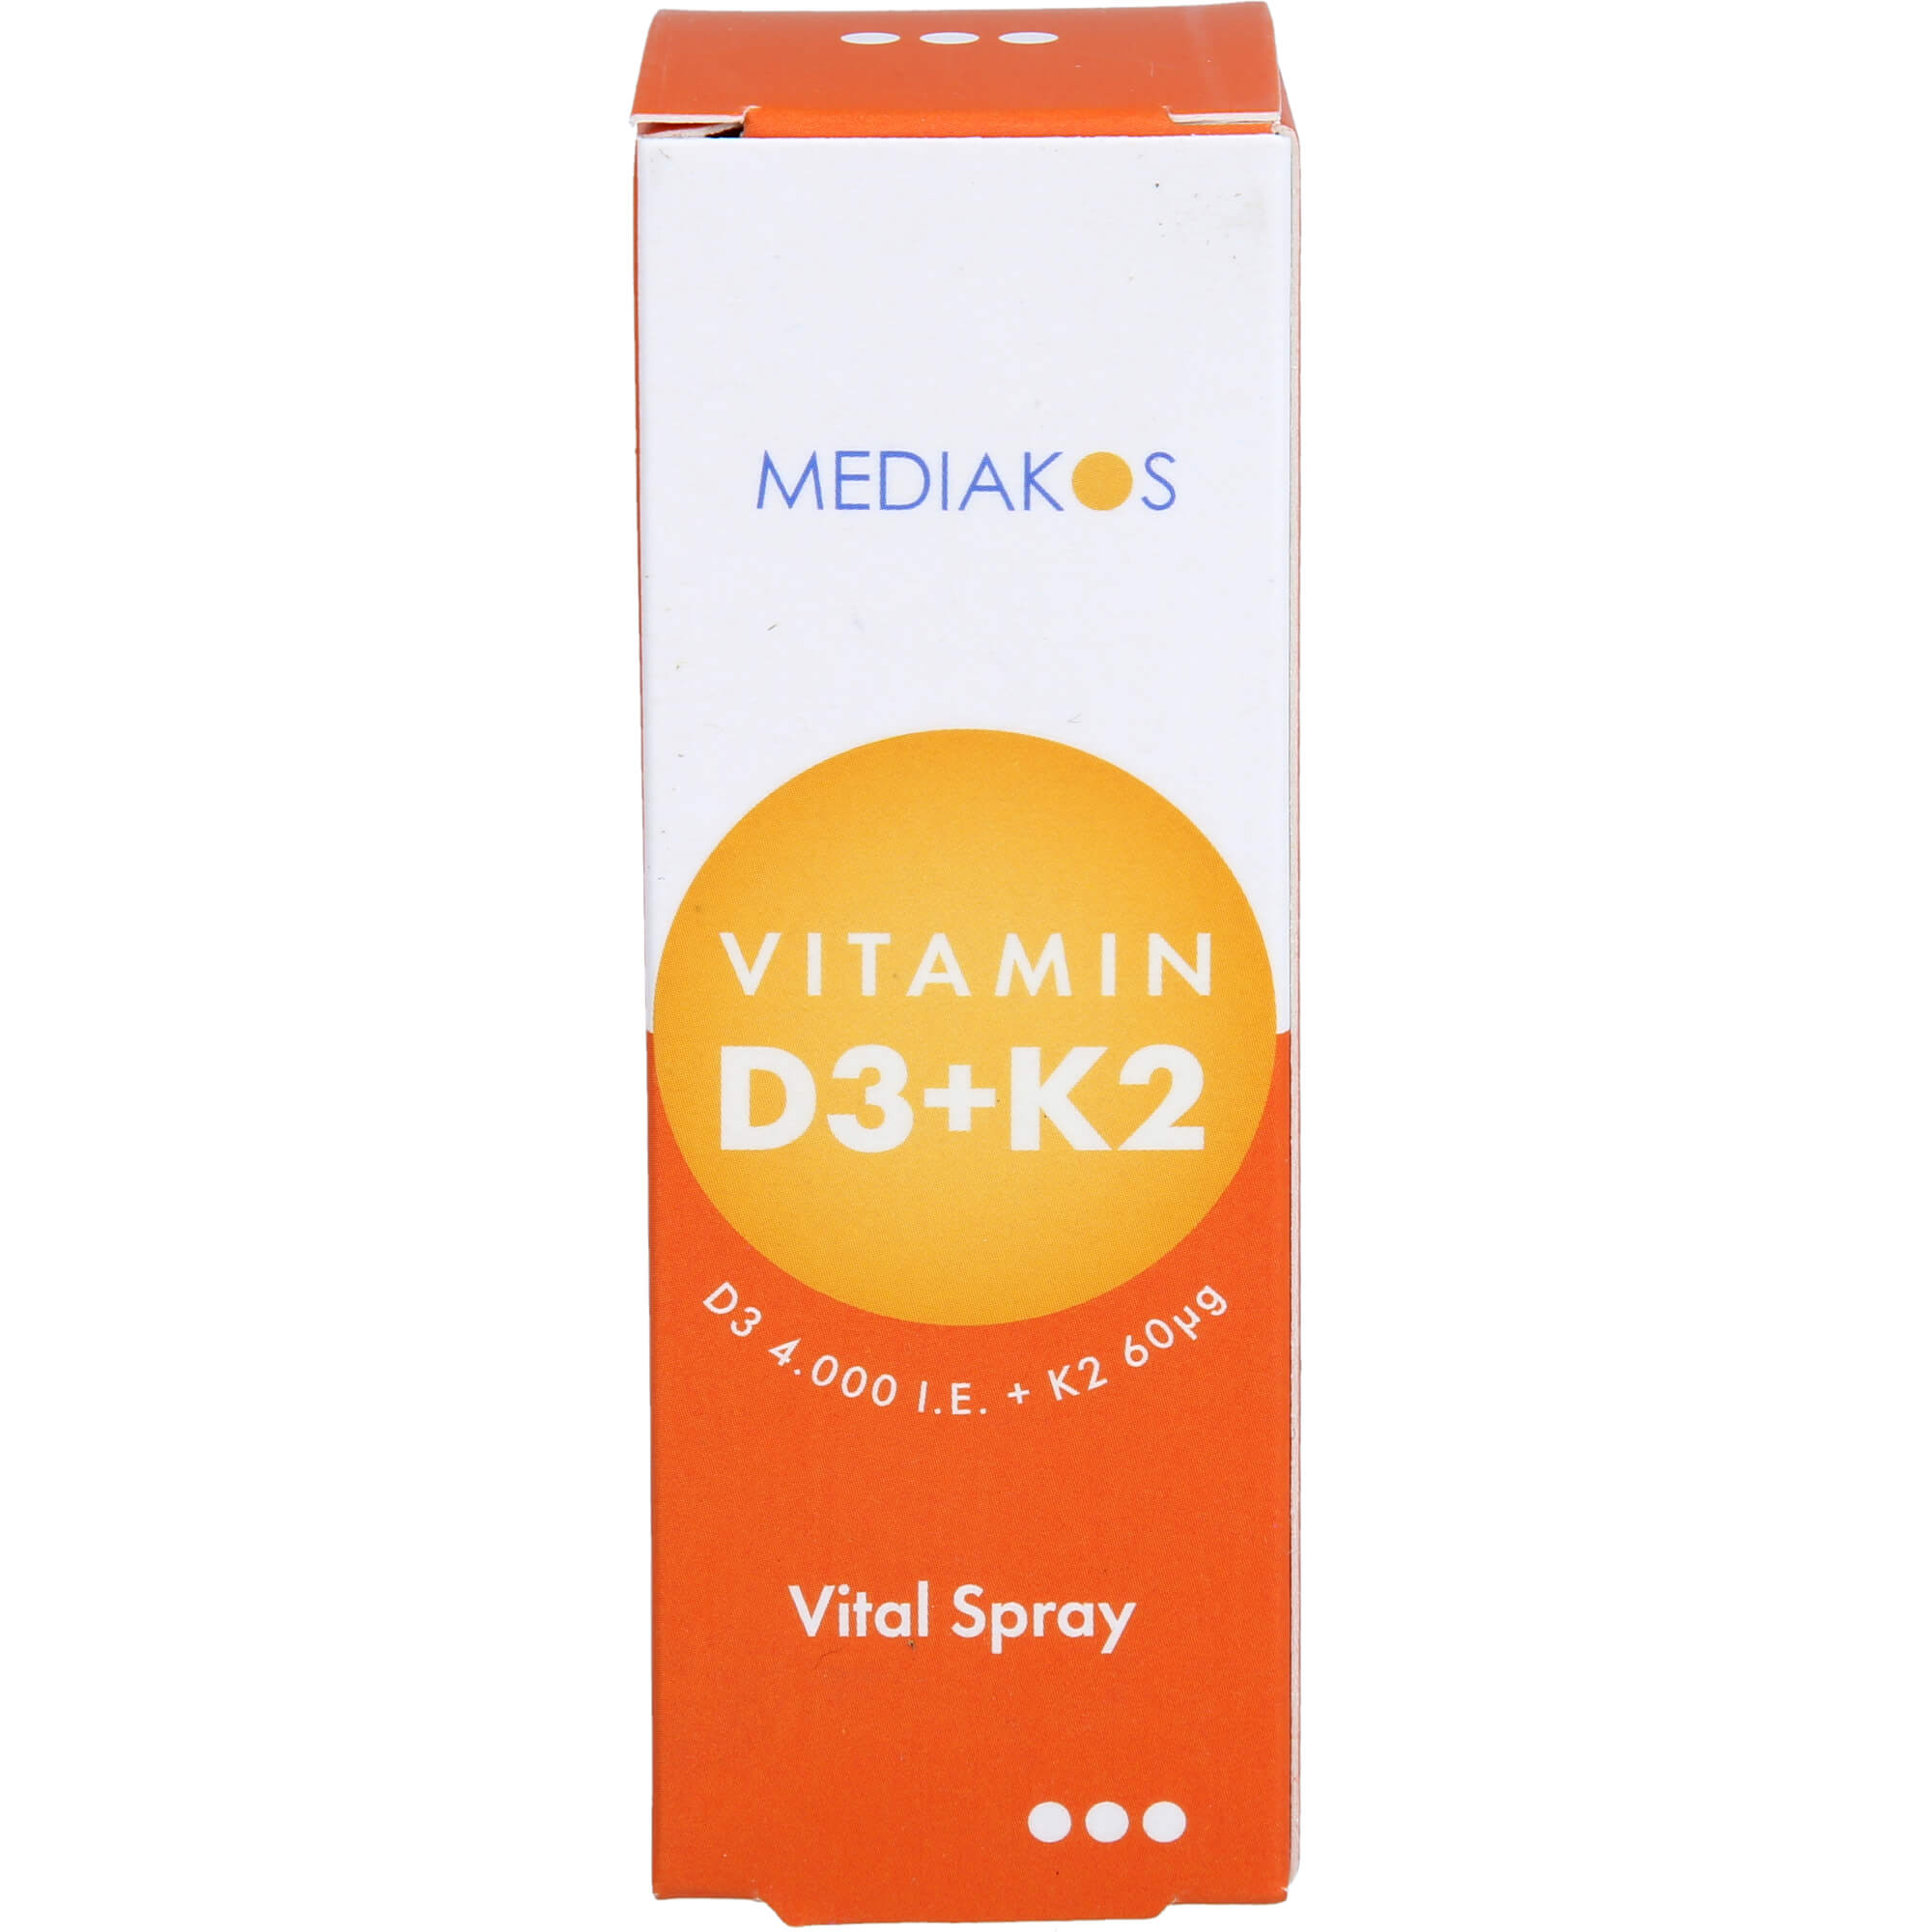 VITAMIN D3+K2 4000 I.E. 60 µg Mediakos Vital Spray